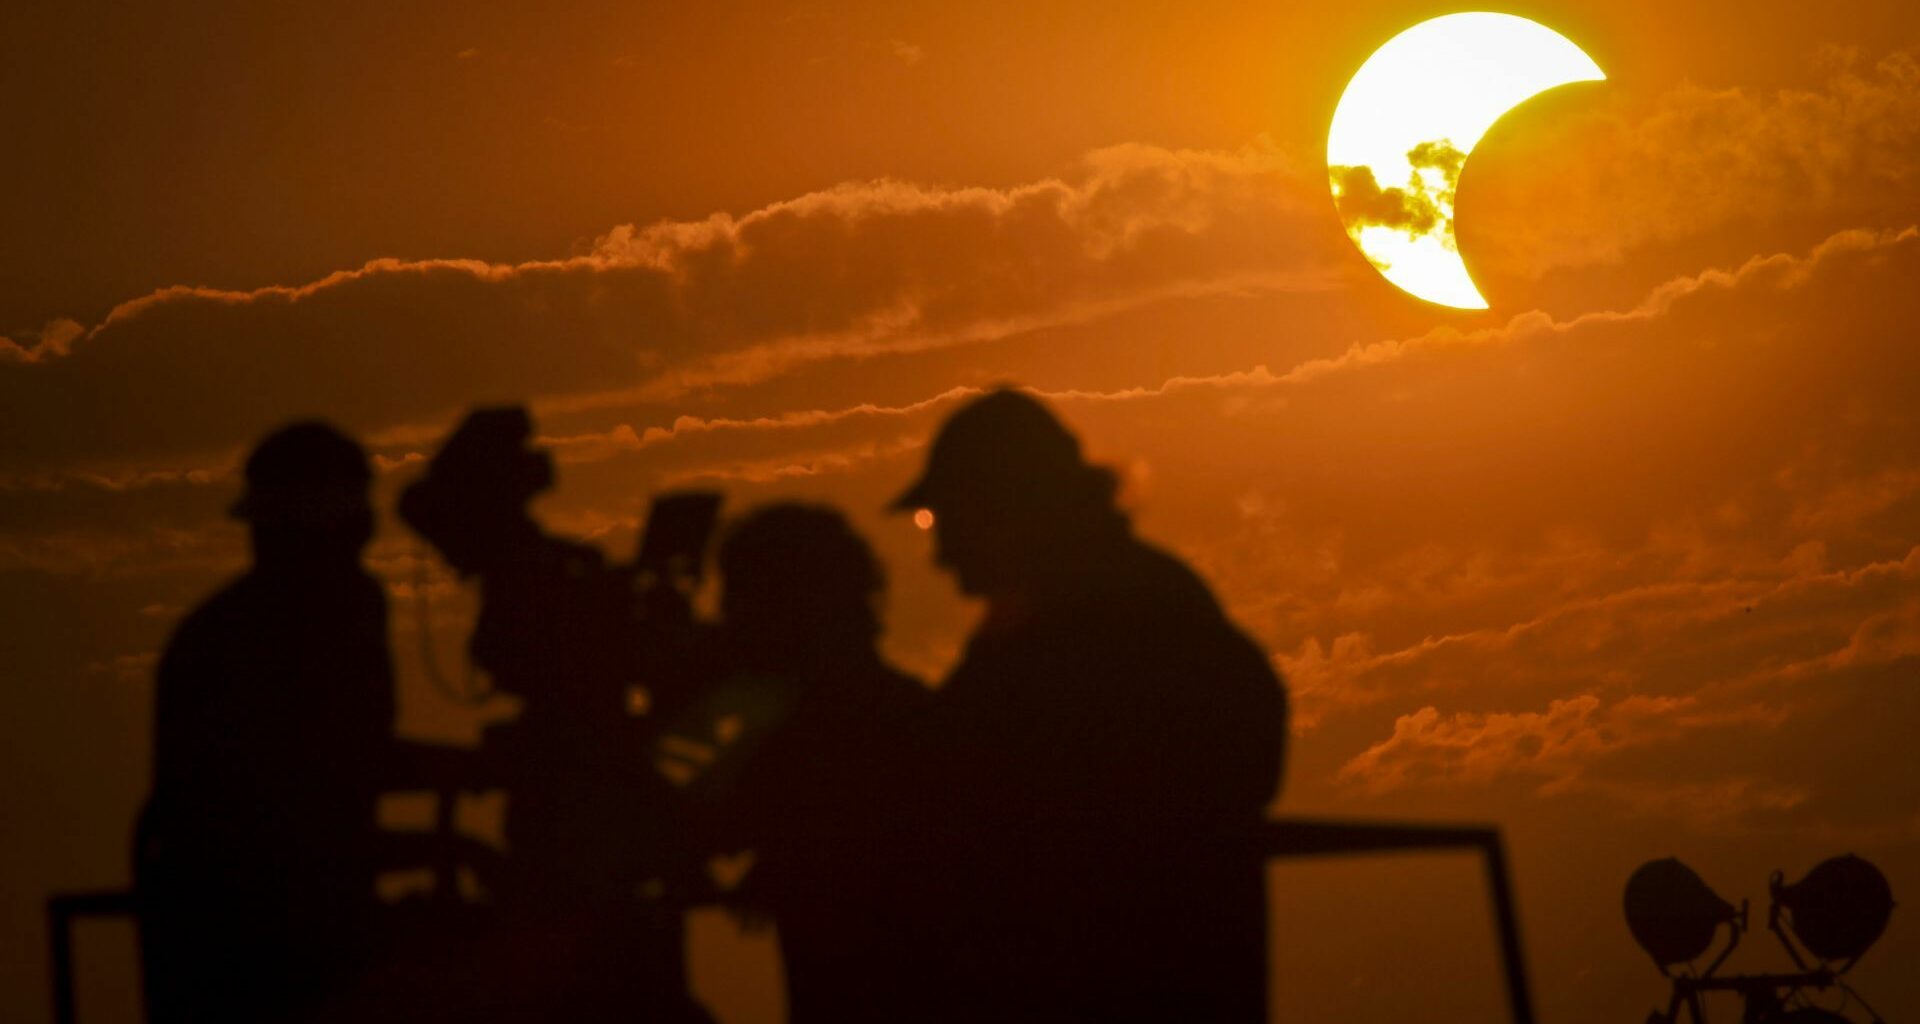 eclipse solar cientificos visitantes hoteles durango 4